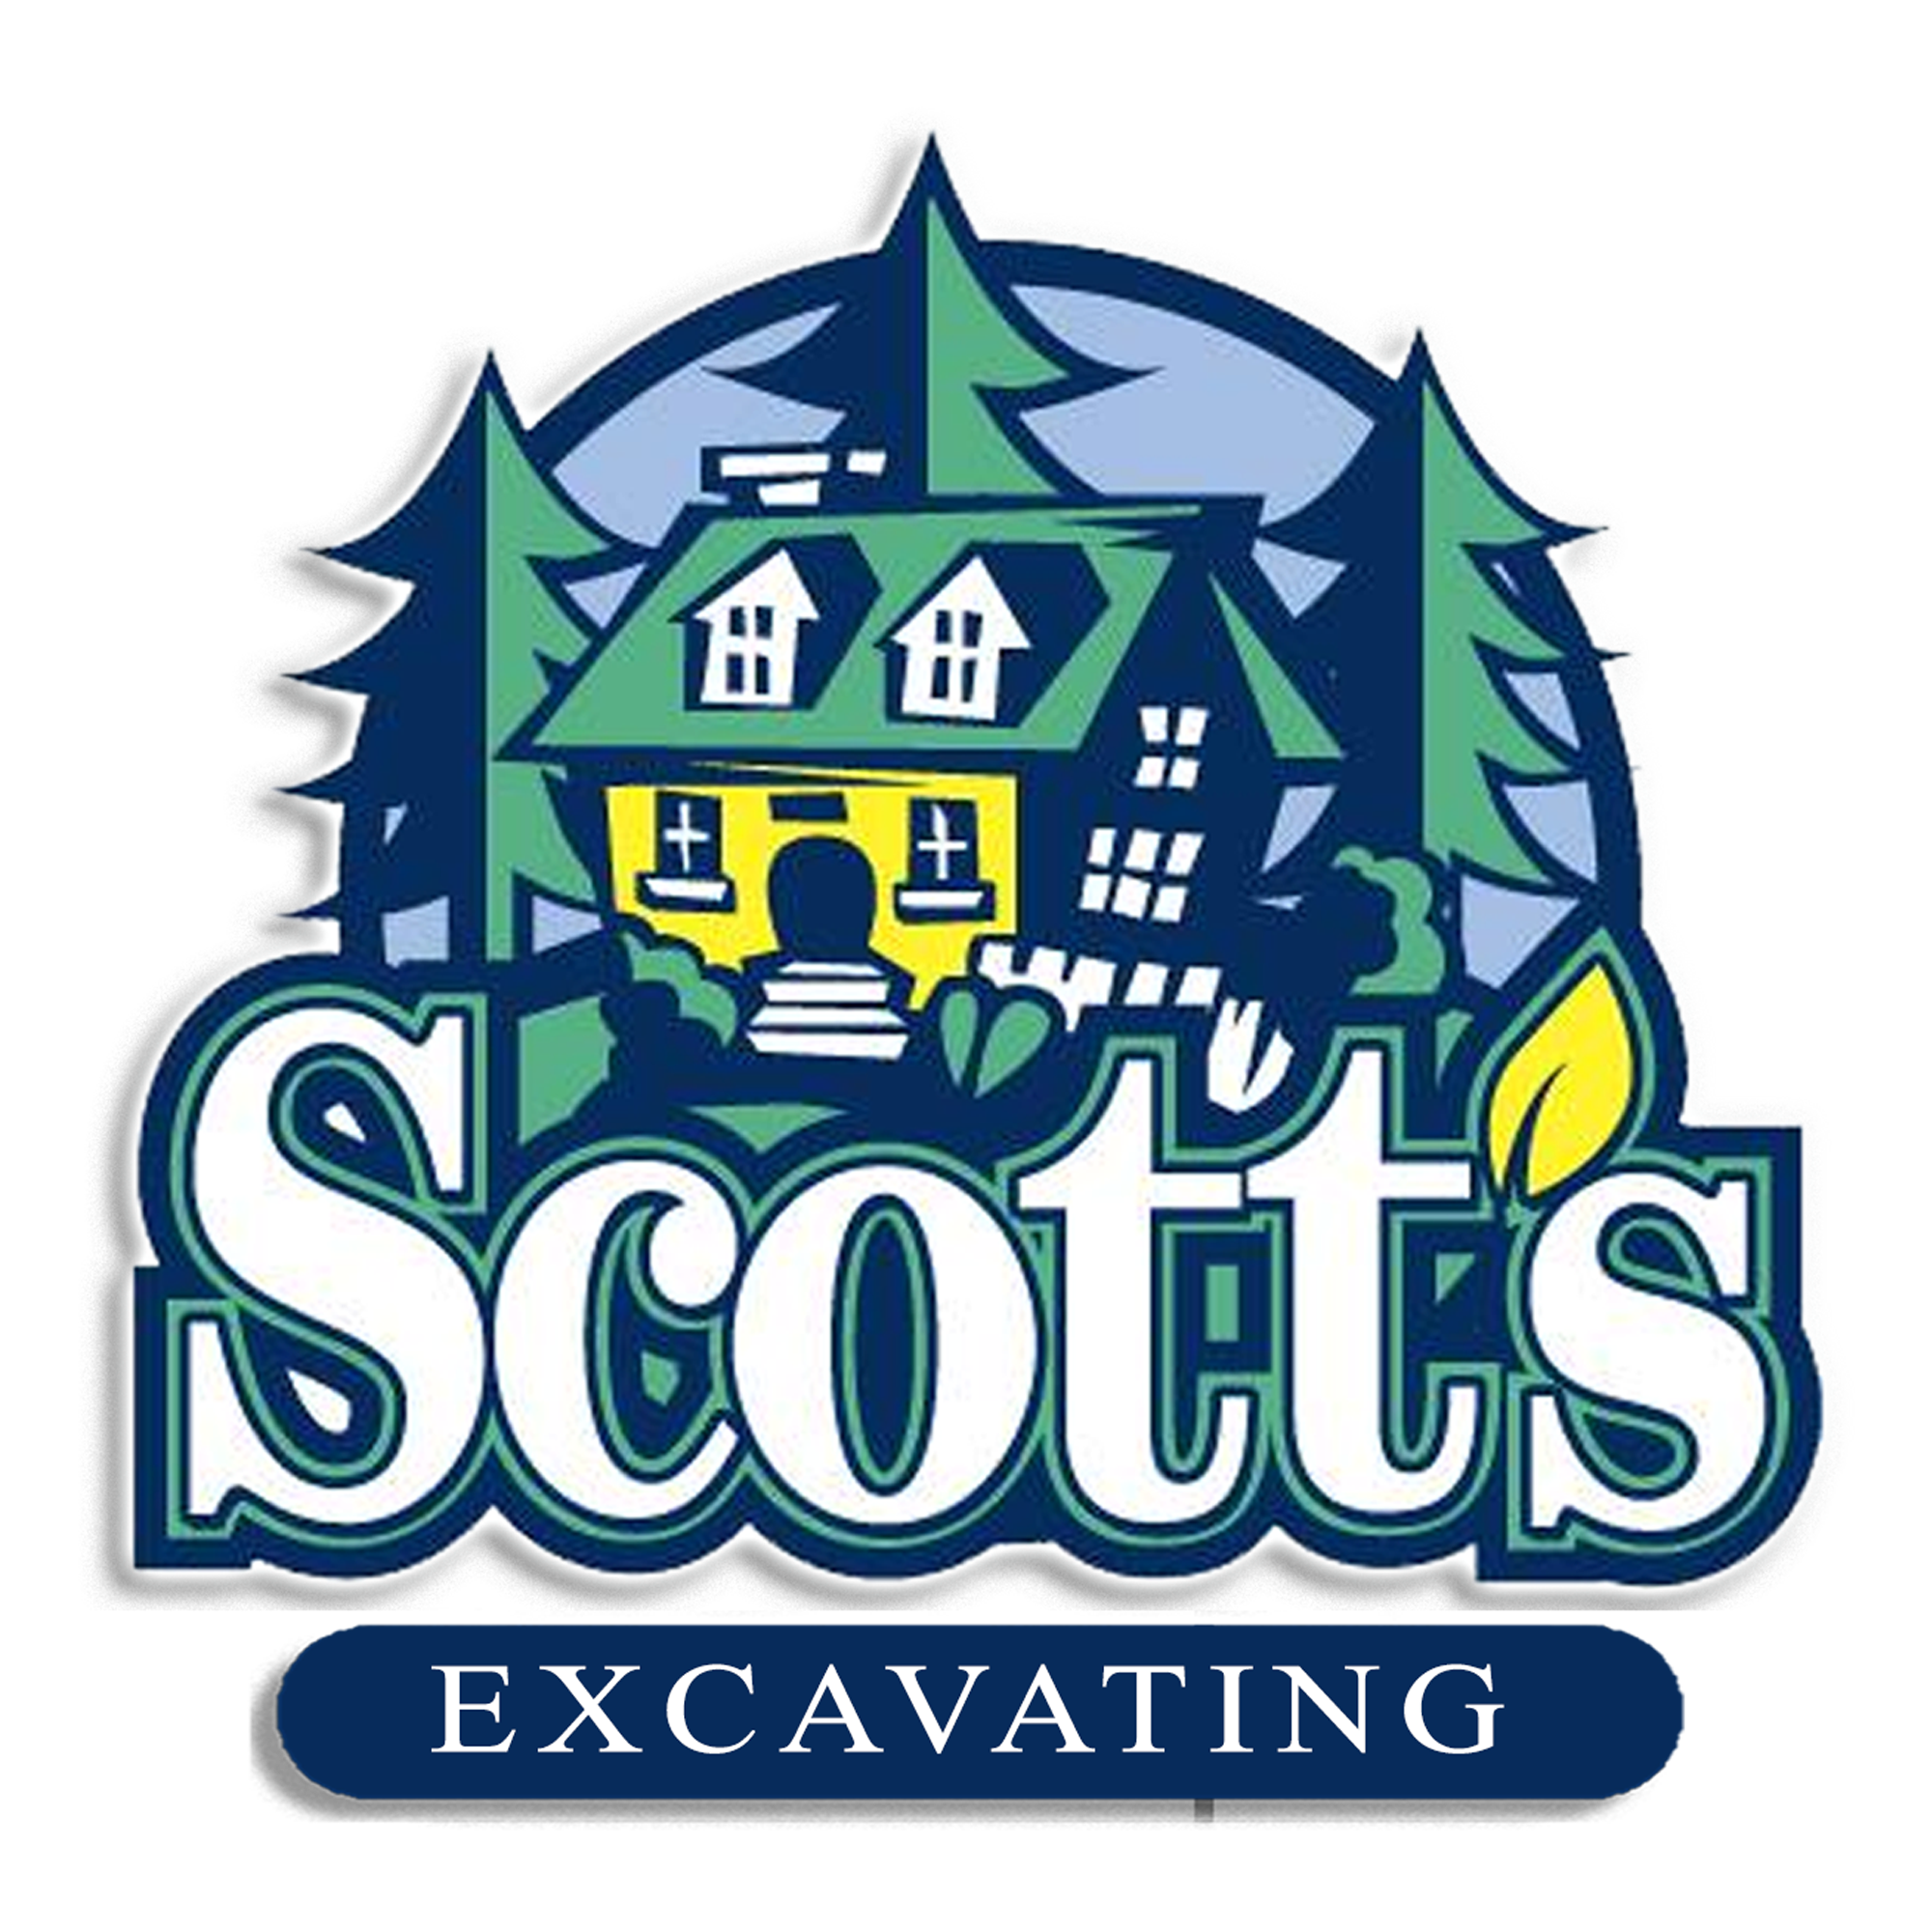 Scott's Excavating and Landscape, Services 